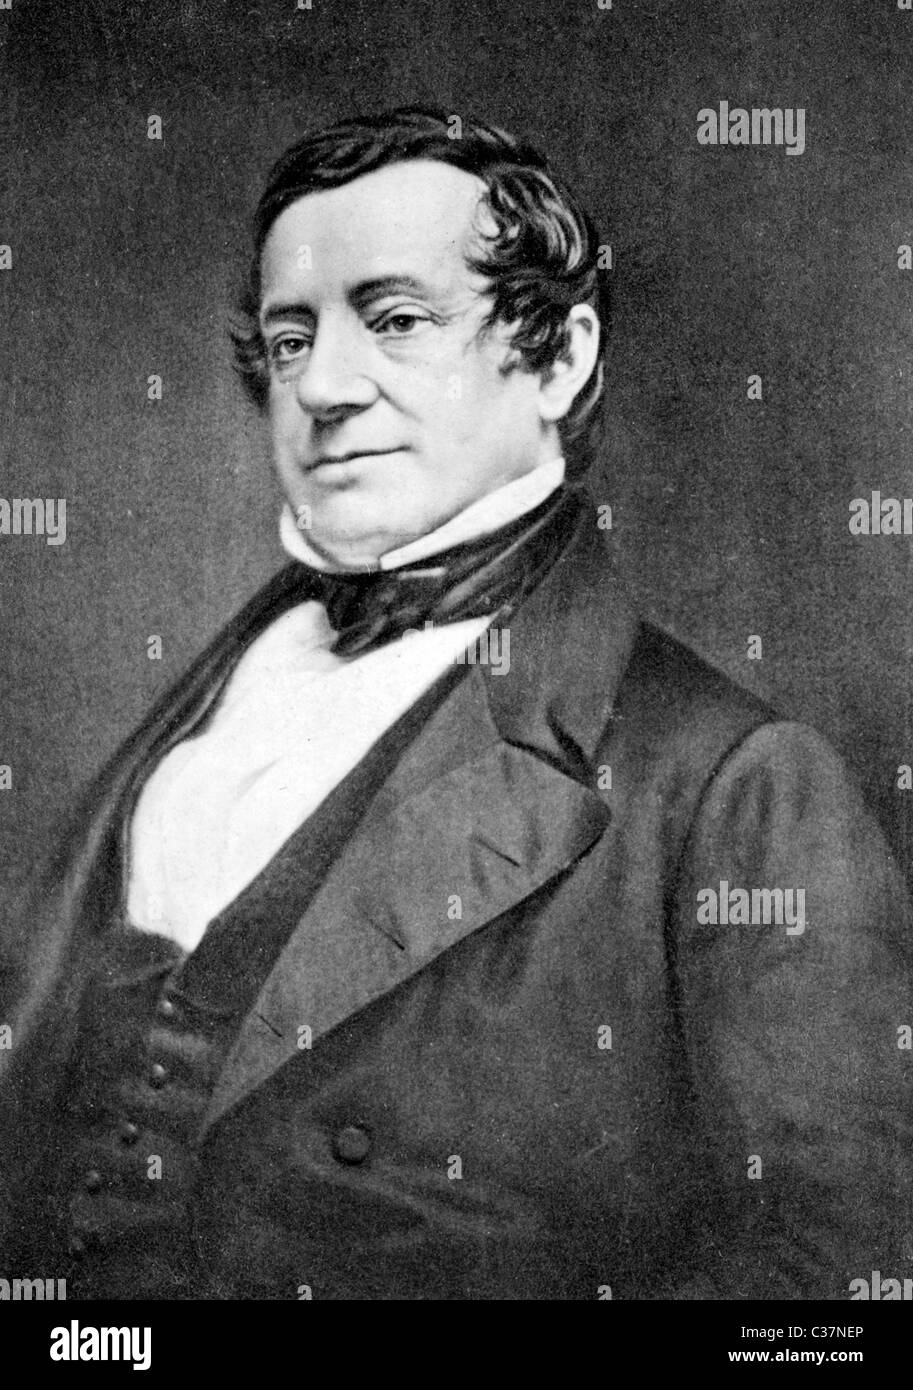 Washington Irving, American author, essayist, biographer and historian. Stock Photo